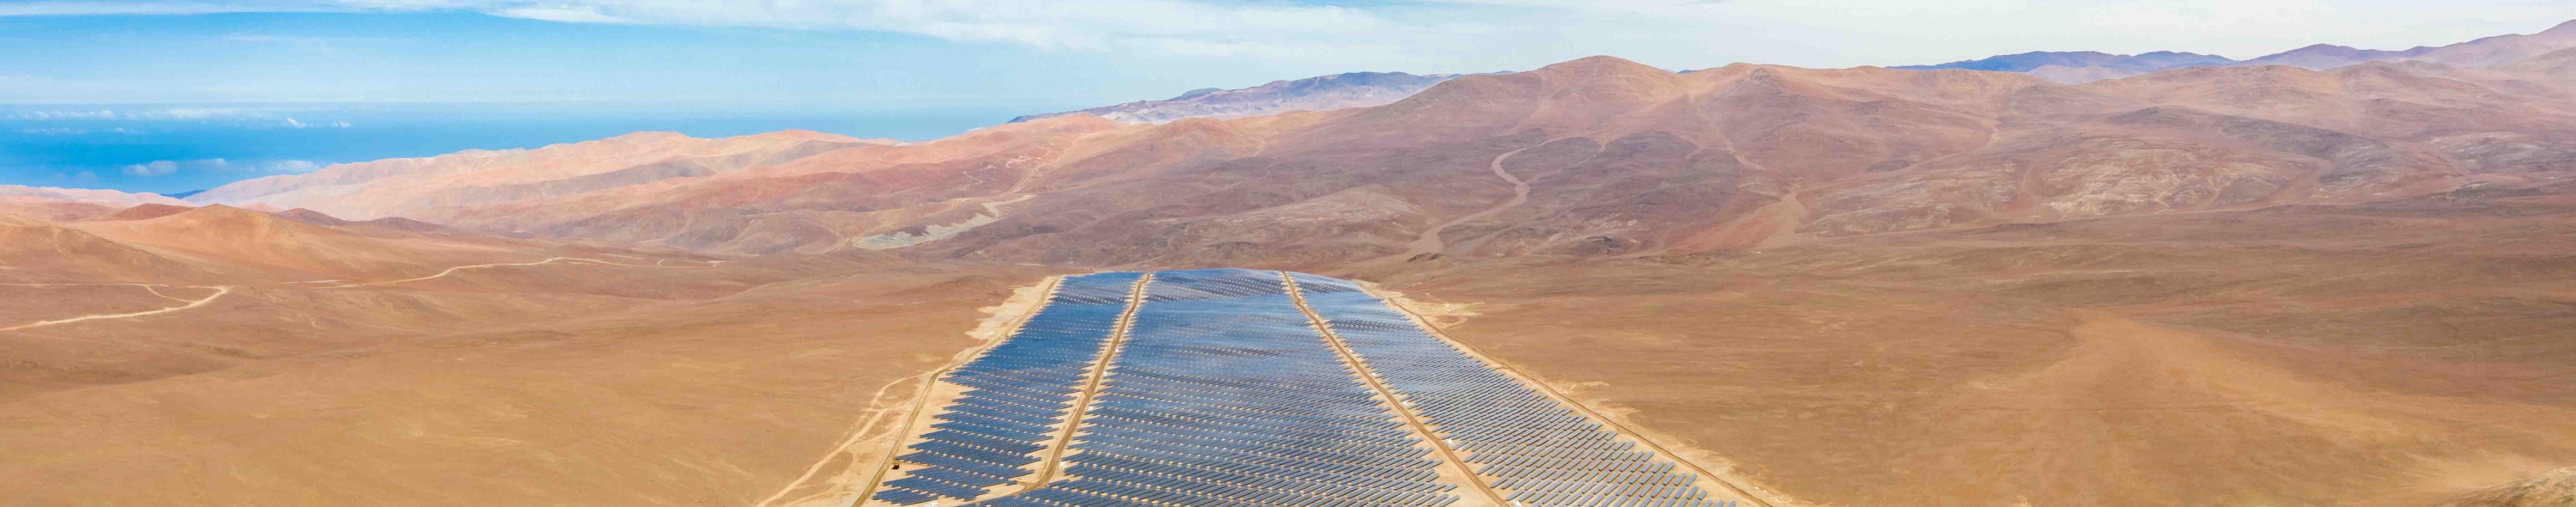 Chile solar energy photovoltaic power plant over Atacama desert sands